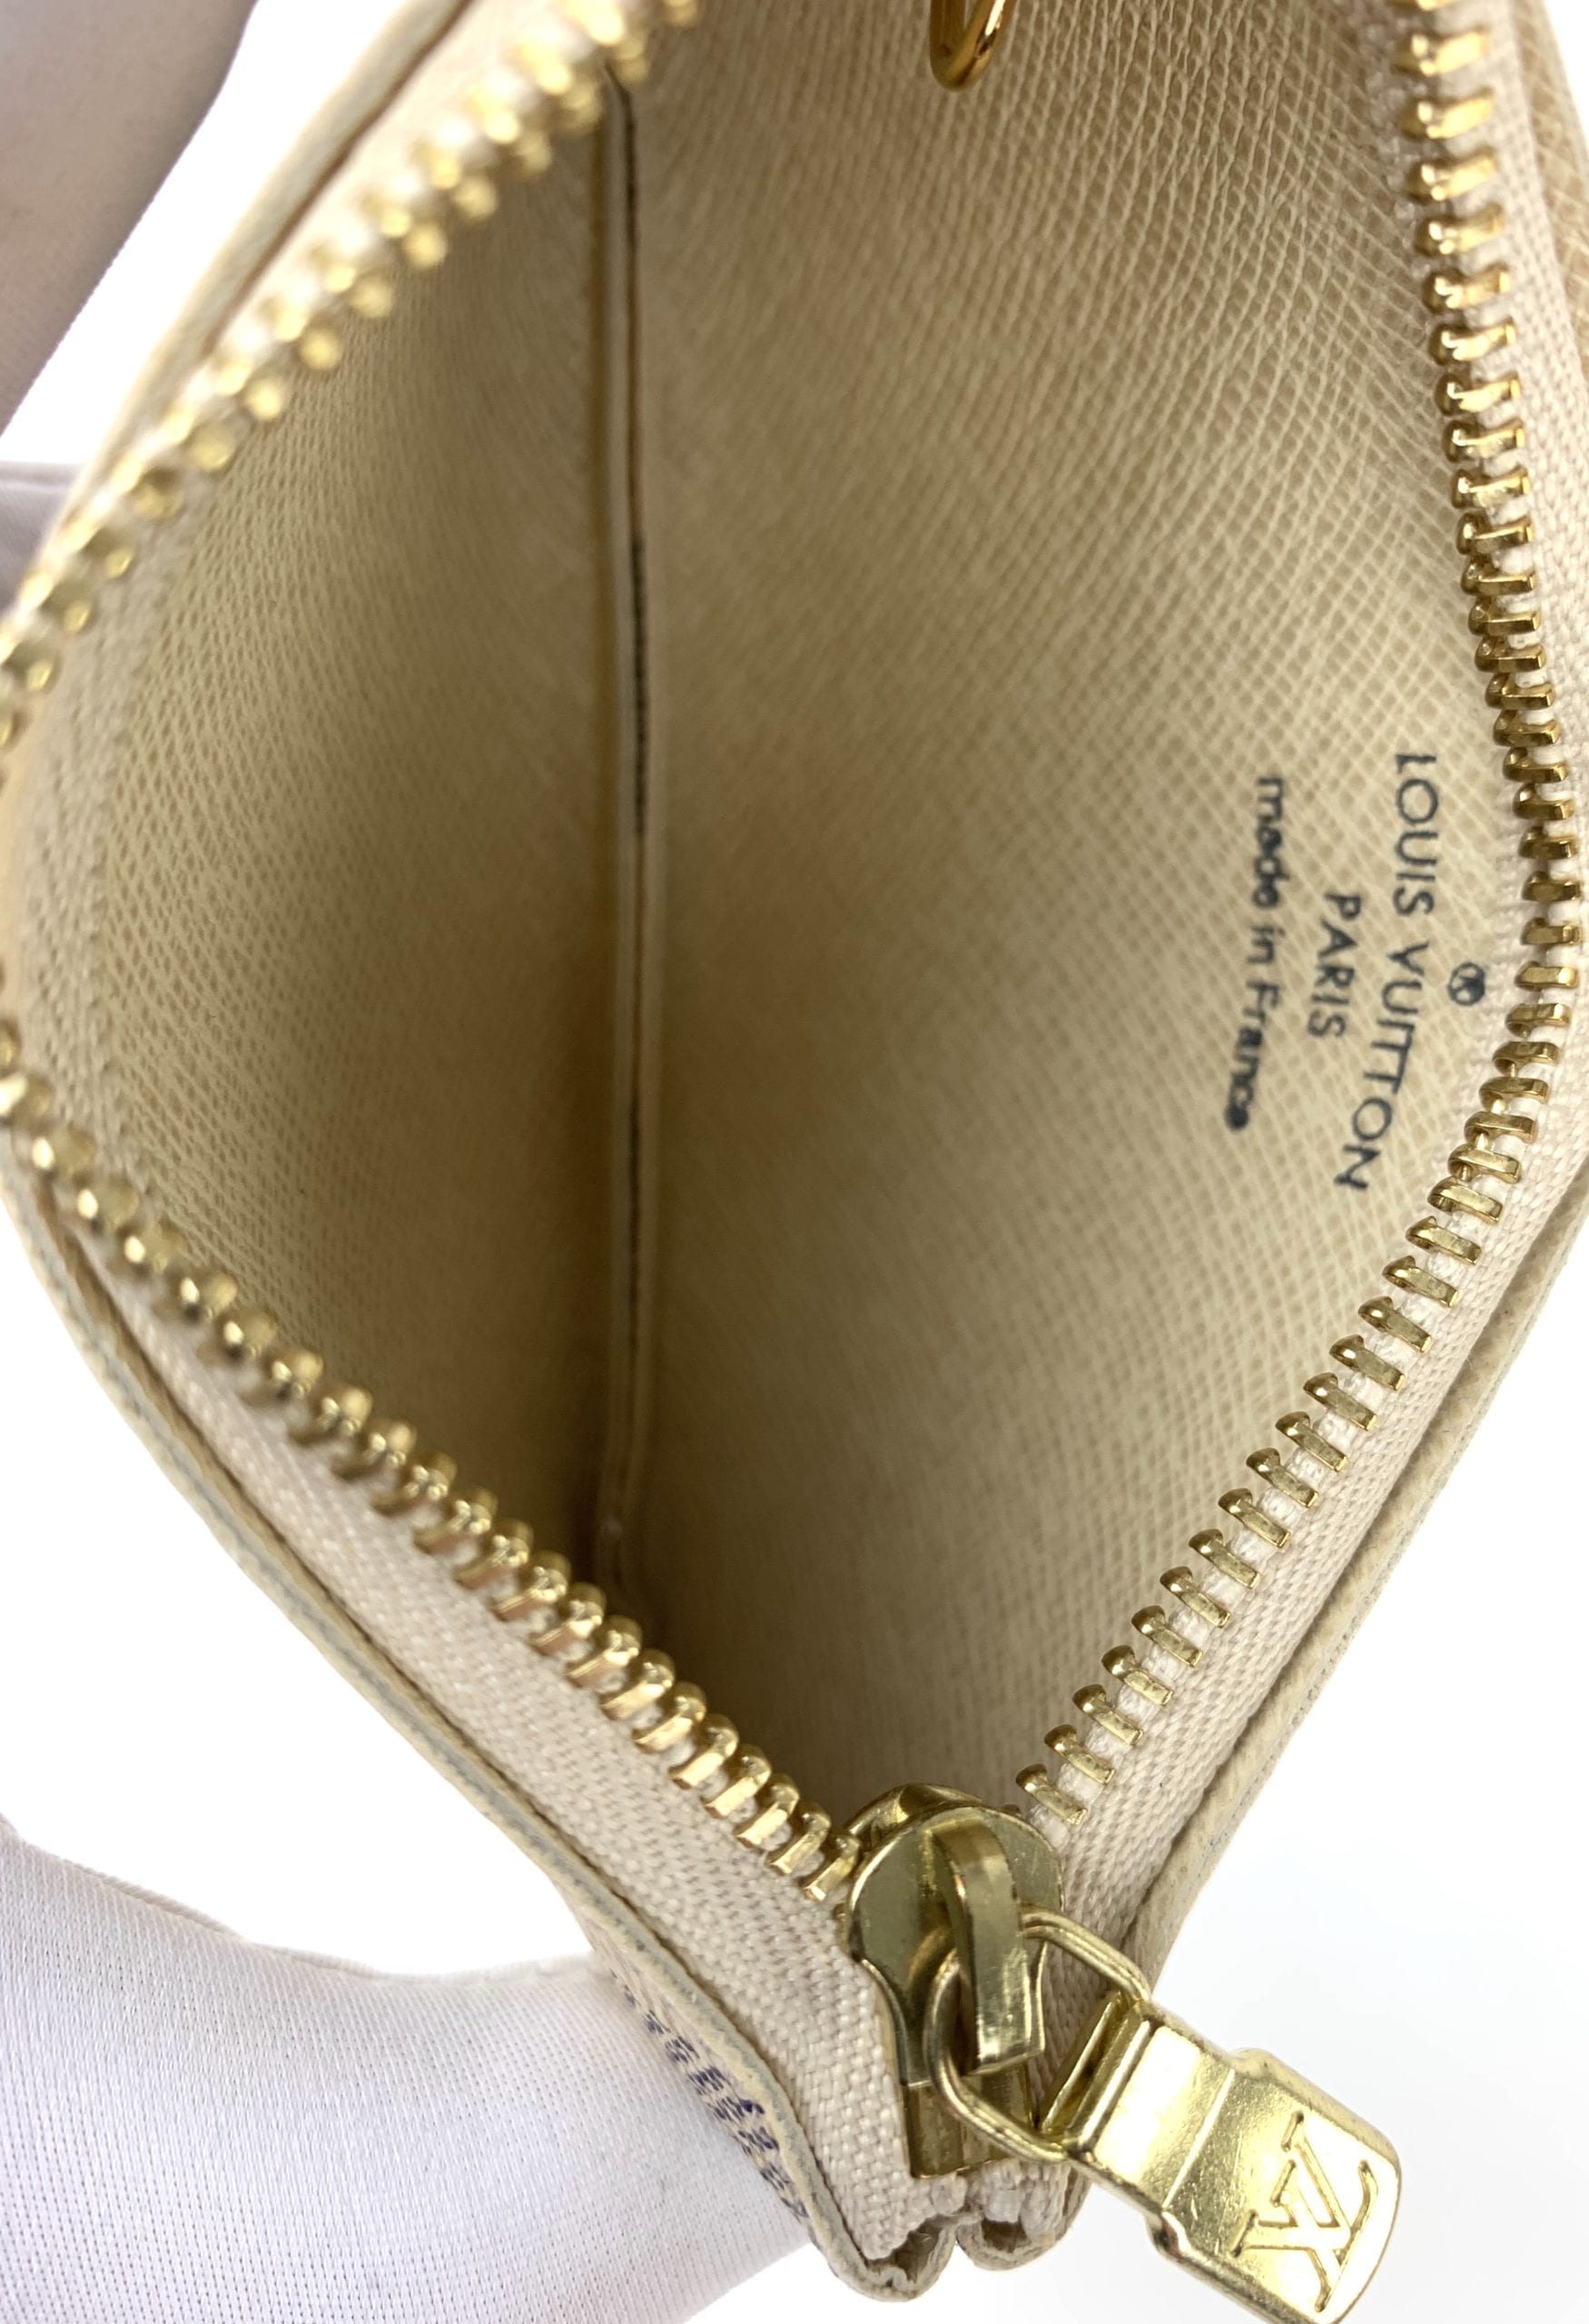 Key Pouch Damier Ebene - Women - Small Leather Goods